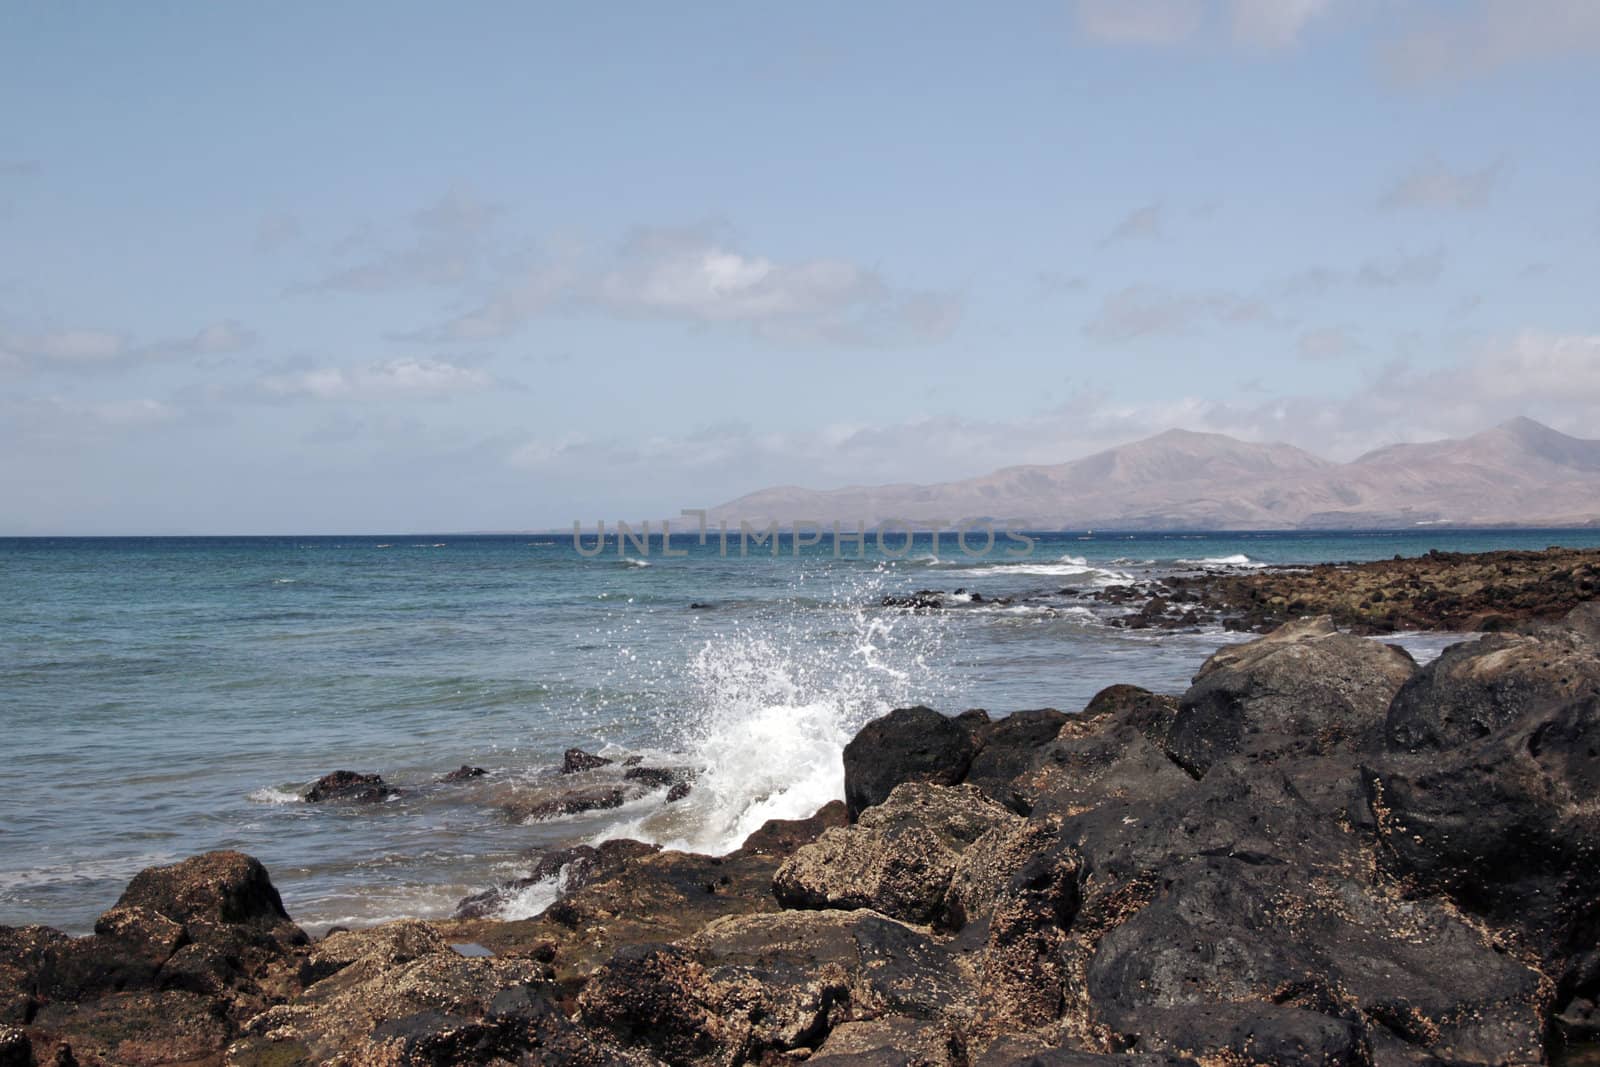 a view of the lanzarote coast line